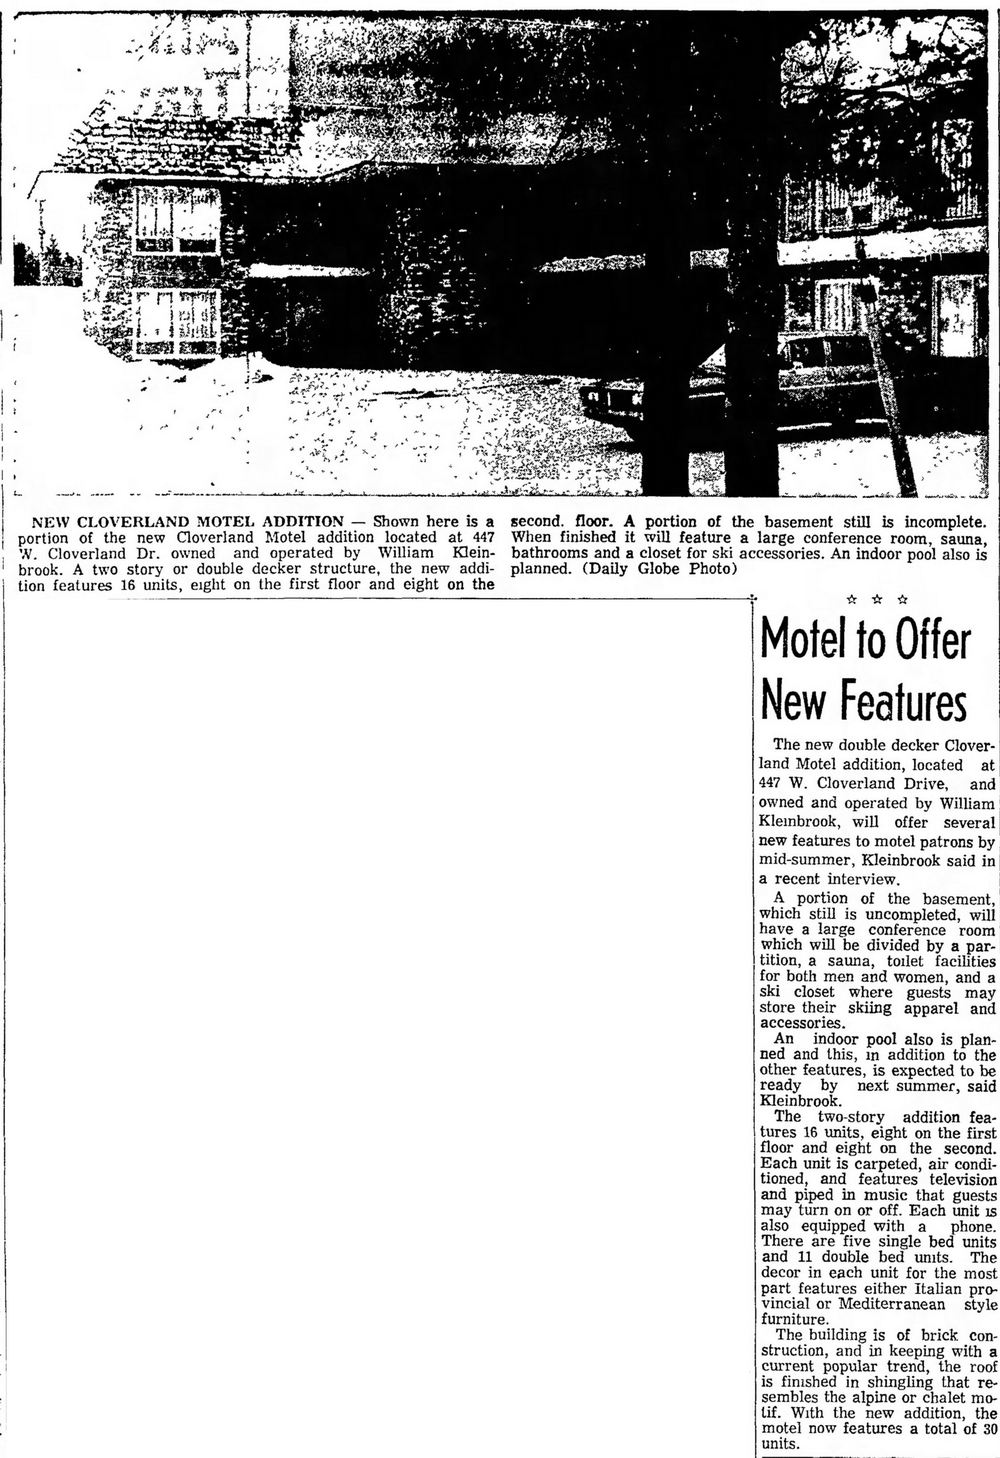 Budget Host Inn (Cloverland Court Motel, Cloverland Motel) - Feb 10 1969 Article On Expansion